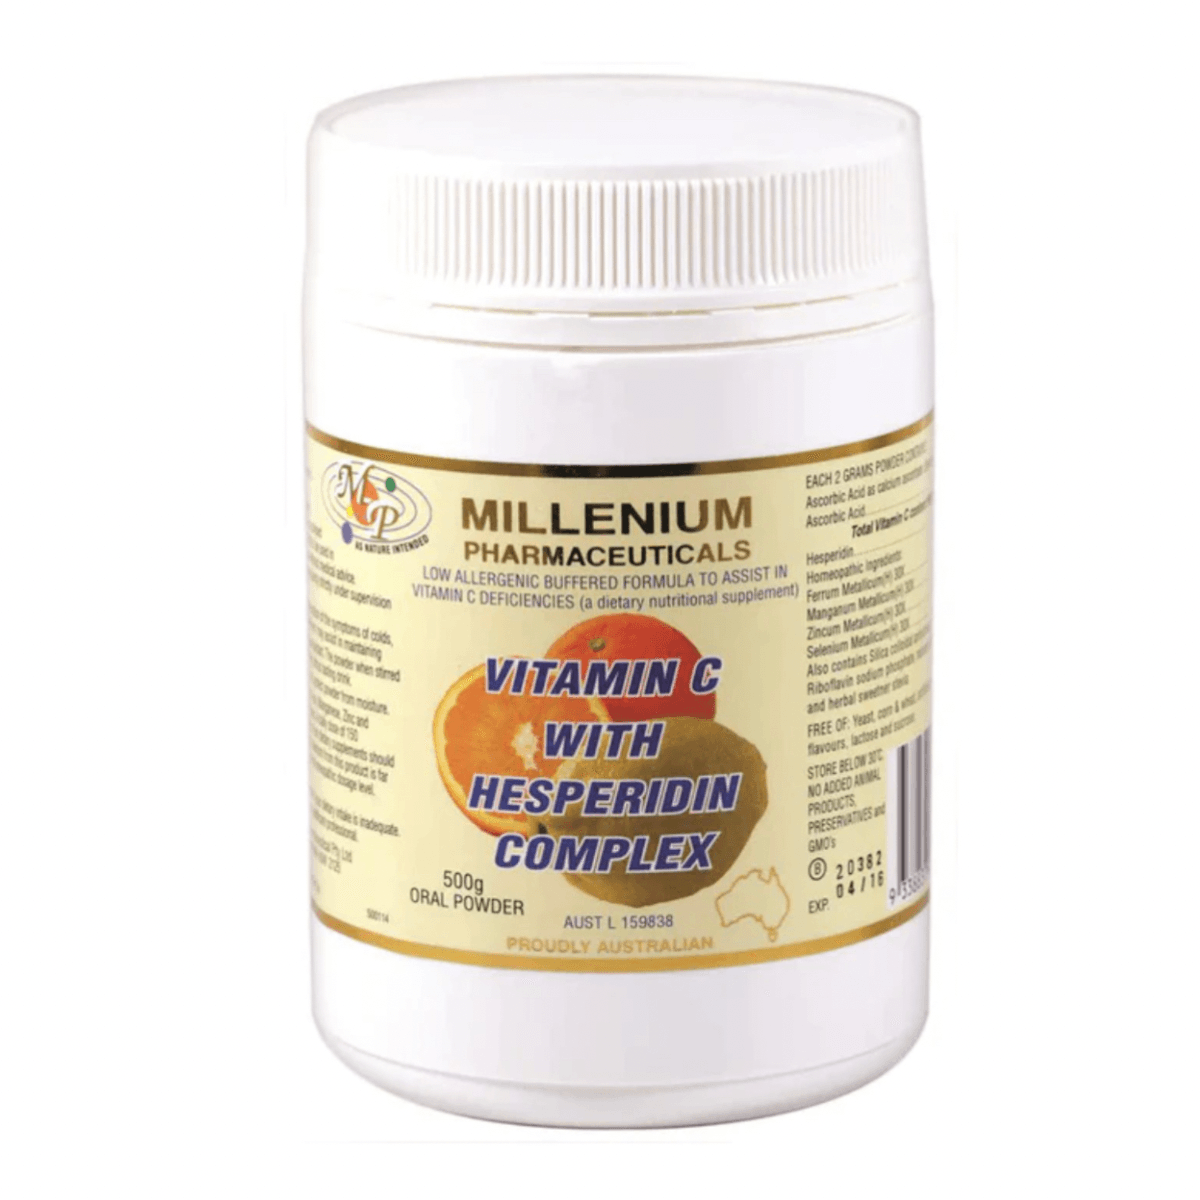 Millenium Pharmaceuticals Vitamin C with Hesperidin Complex Oral Powder 500g - QVM Vitamins™